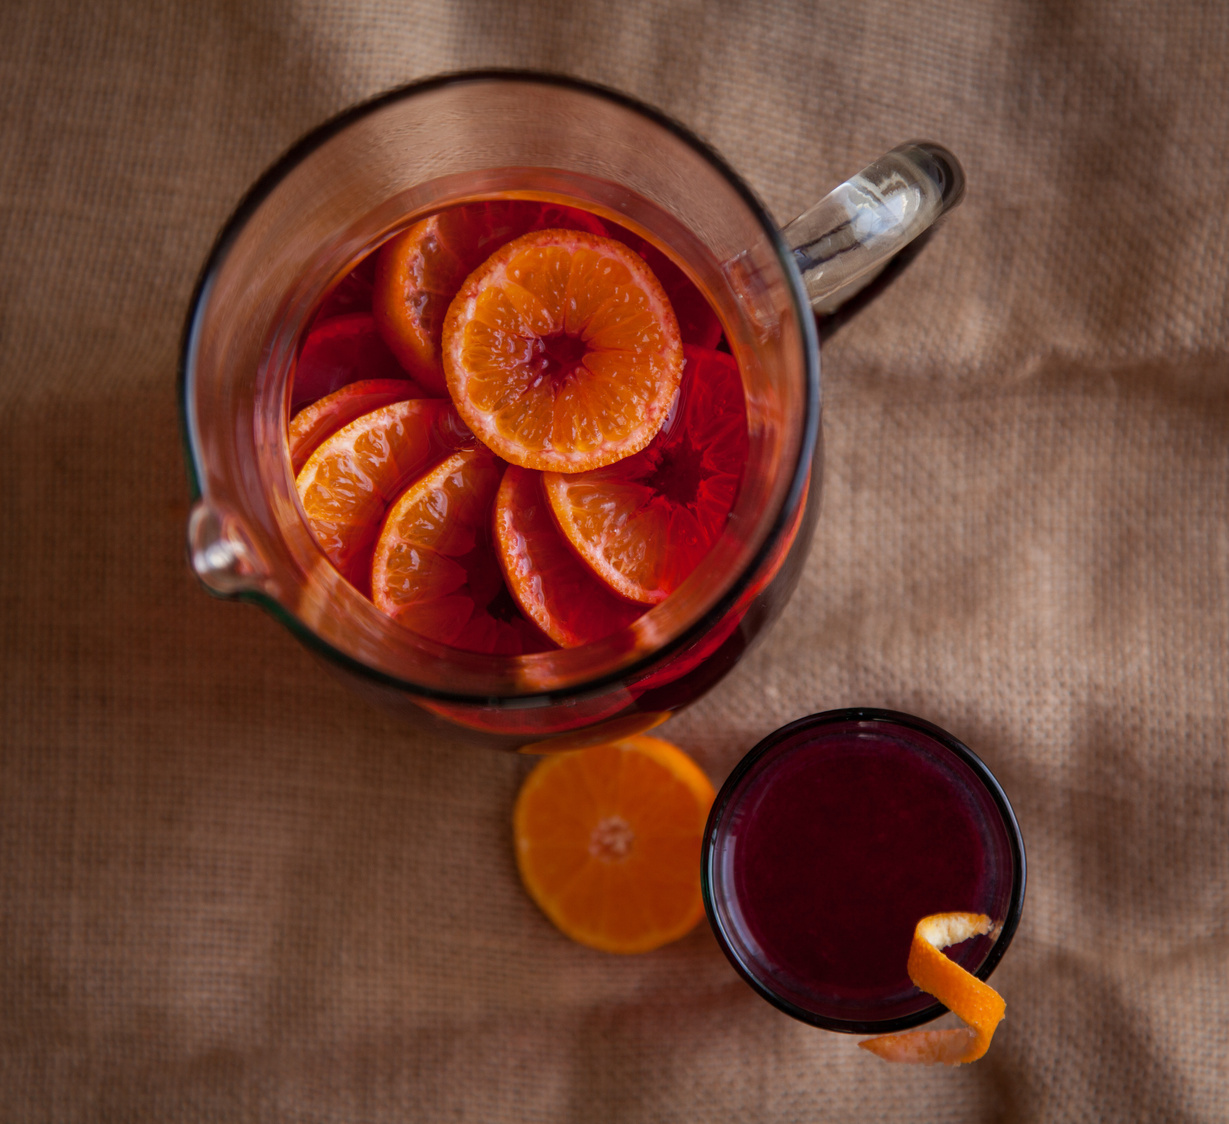 Cranberry orange drink